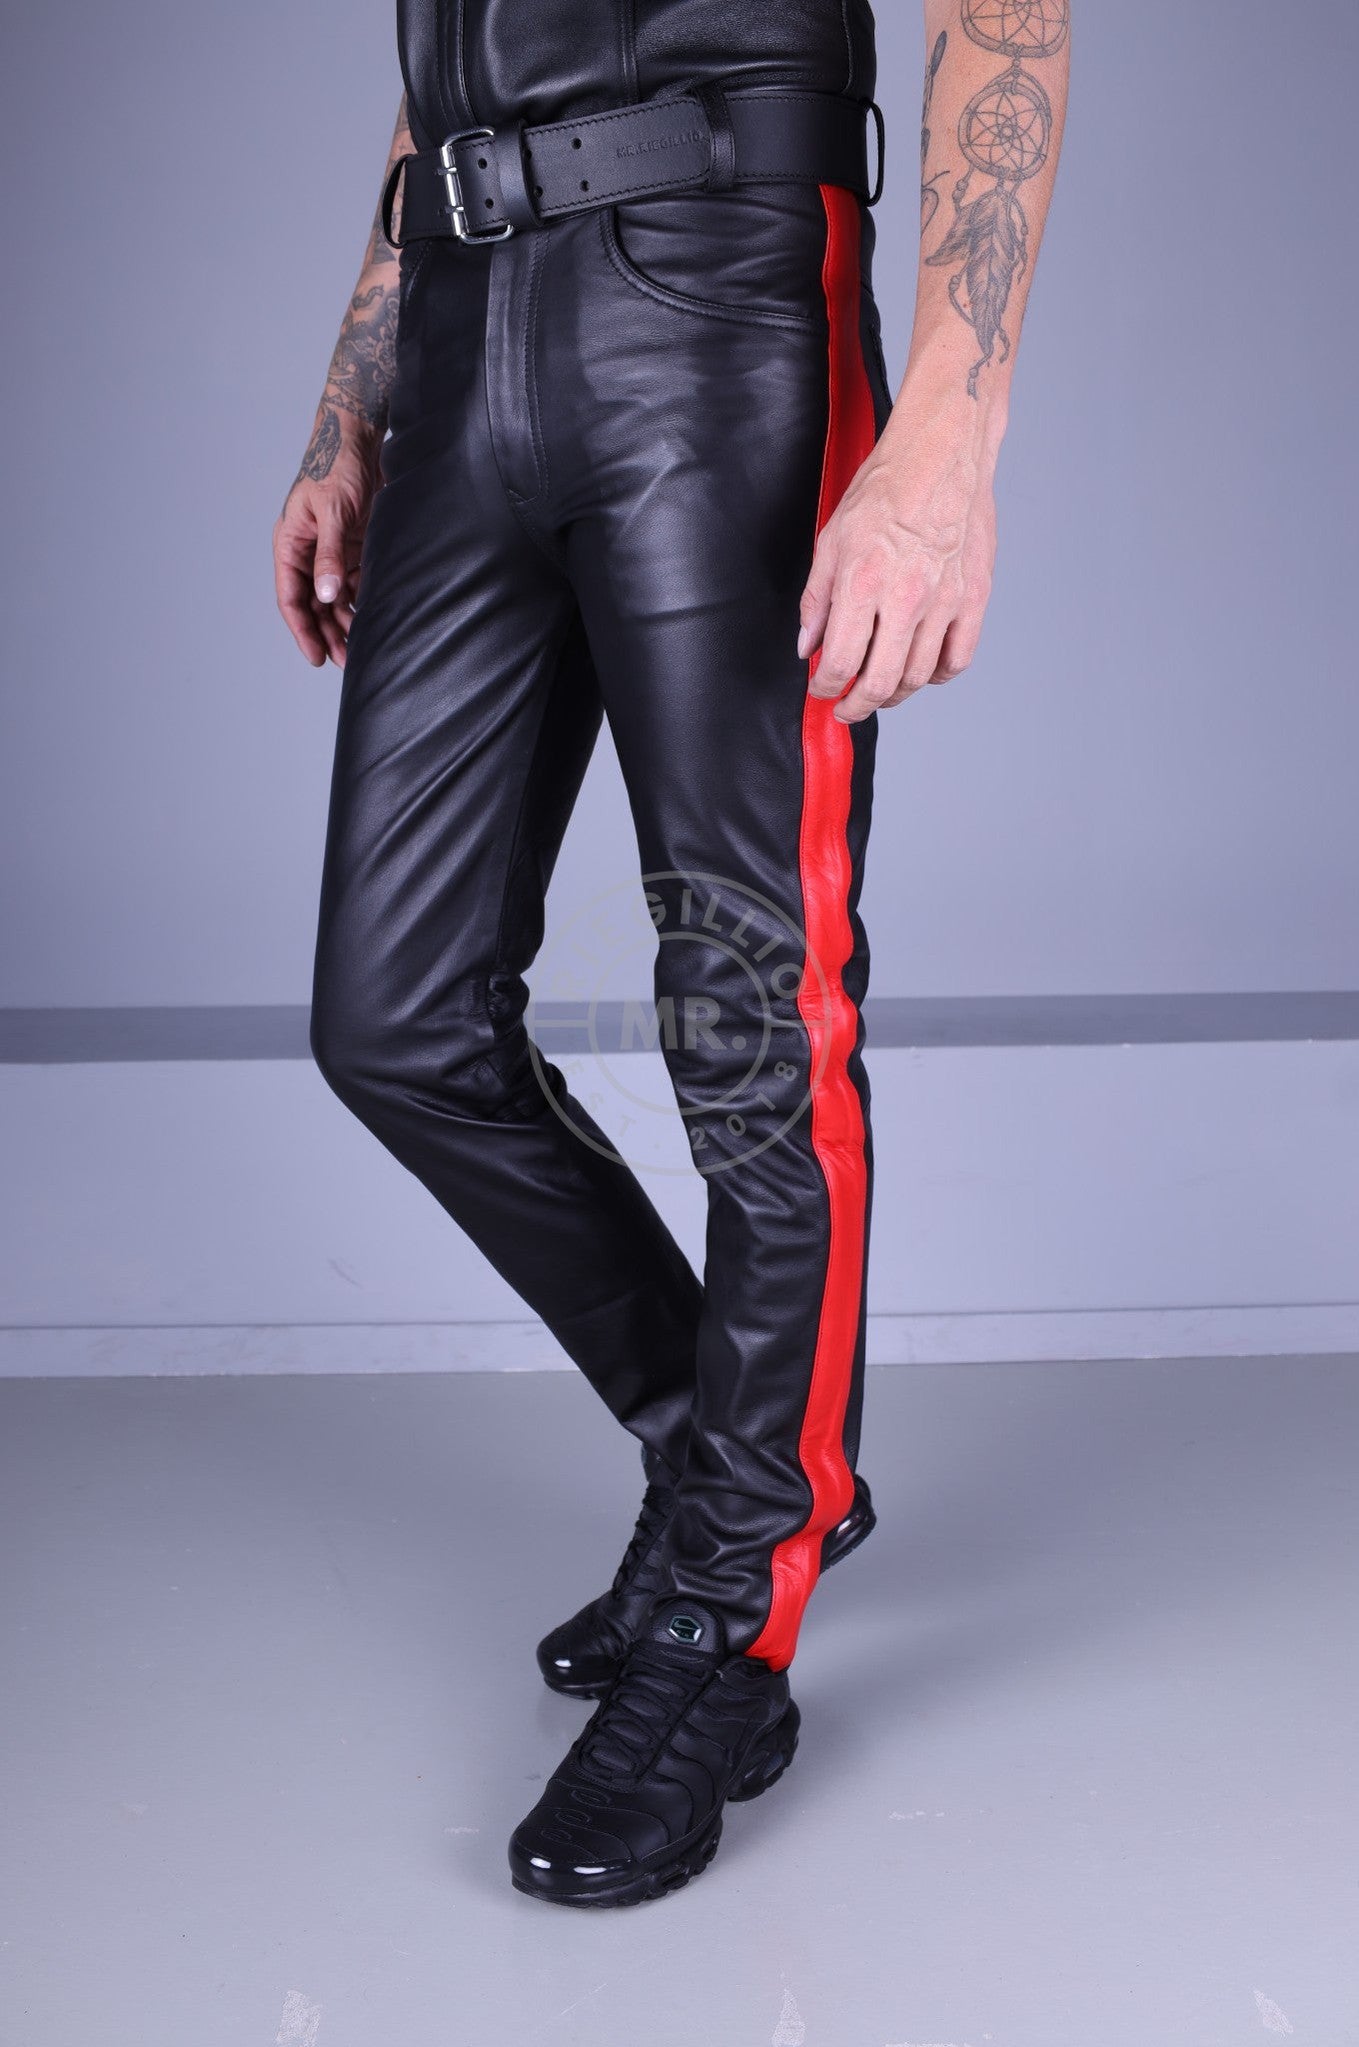 Black Leather 5 Pocket Pants - Red Stripe at MR. Riegillio